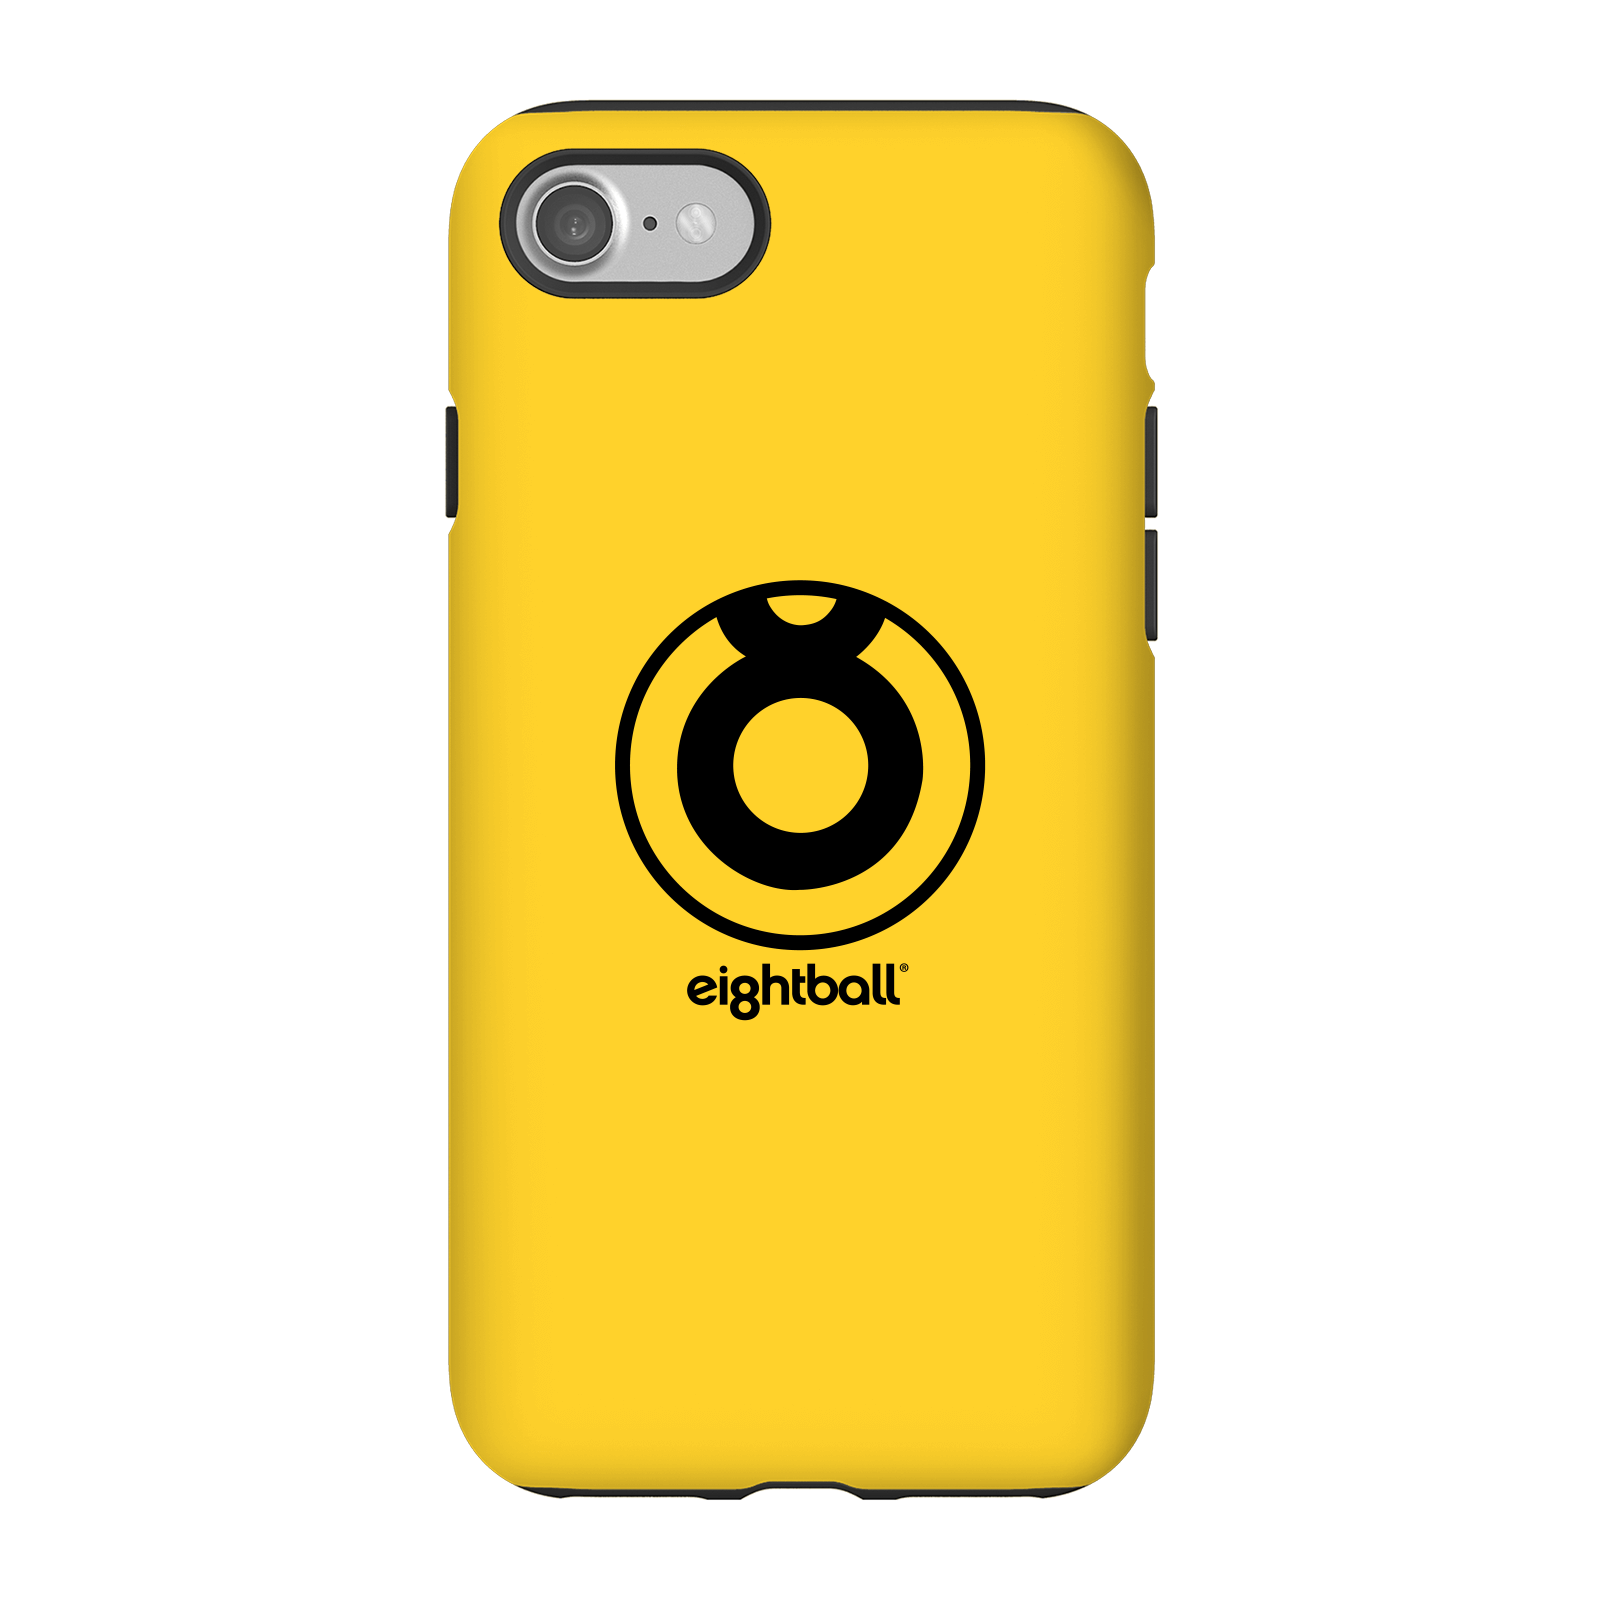 Funda Móvil Ei8htball Large Circle Logo para iPhone y Android - iPhone 7 - Carcasa doble capa - Mate